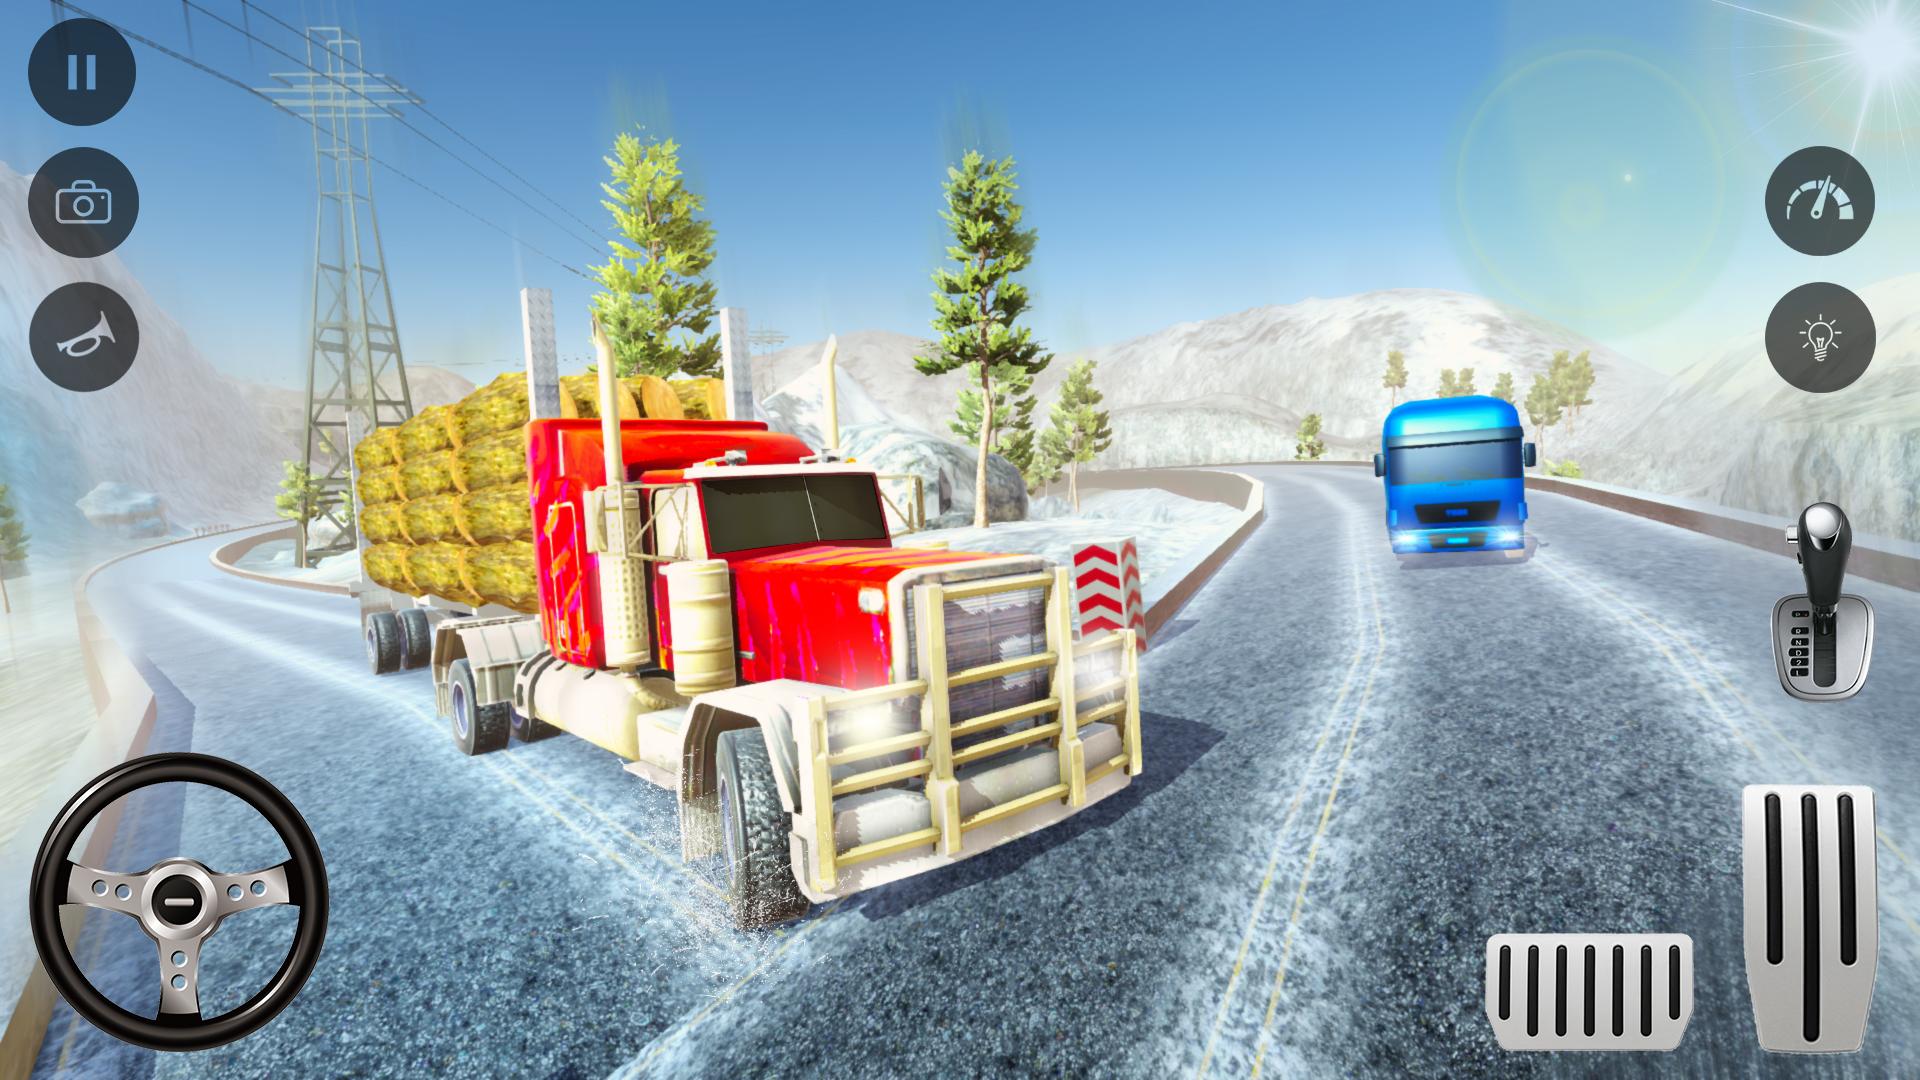 Ultimate Truck Driving Simulator 2020 игра. Дулан игра грузовик. Игра вождения грузовика